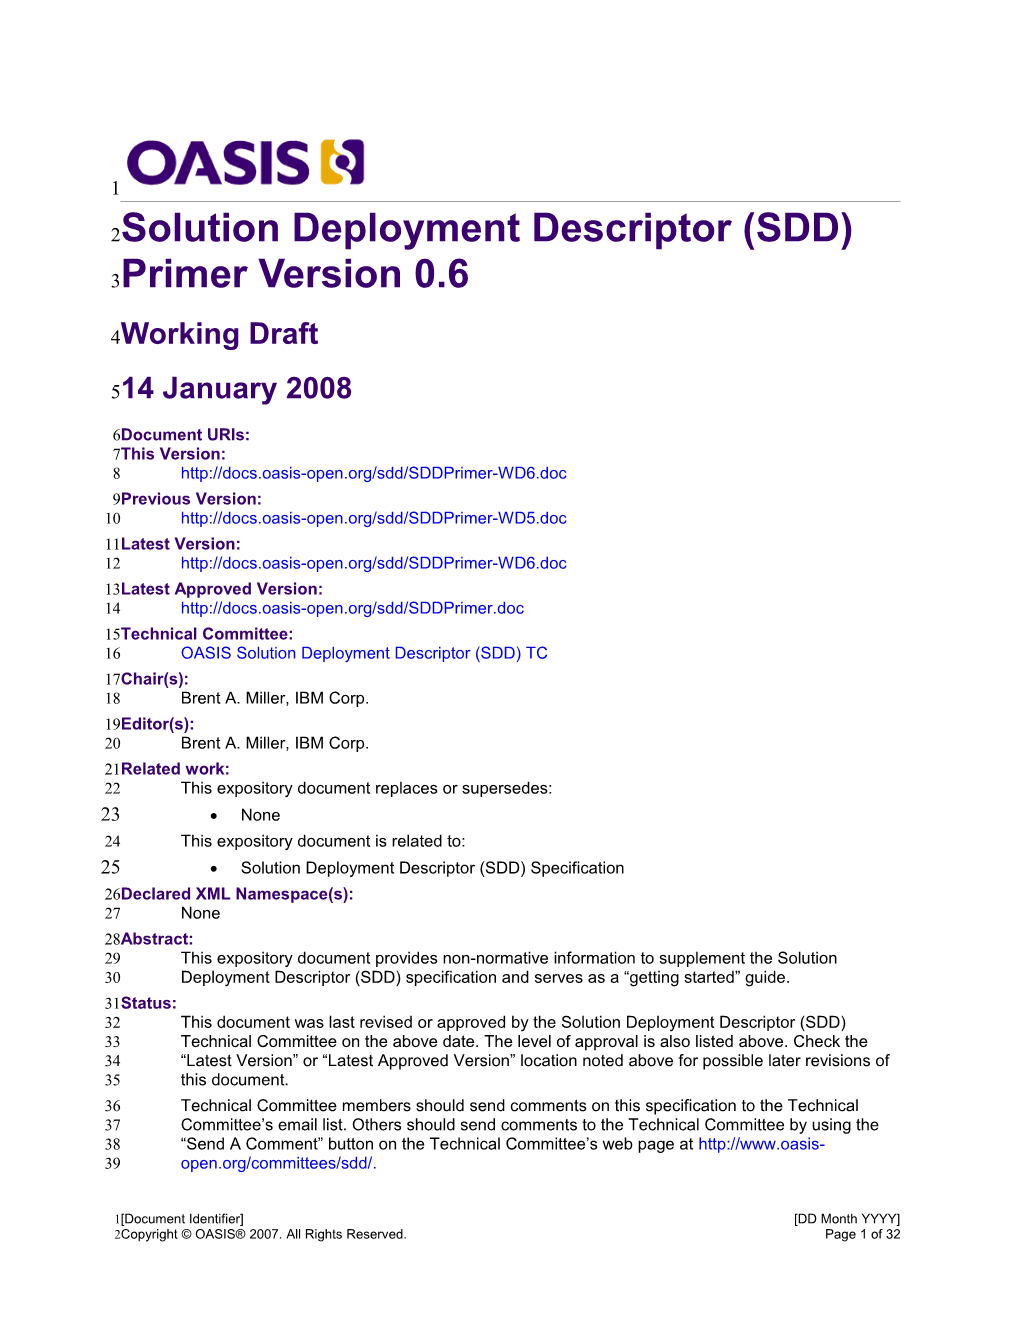 OASIS Solution Deployment Descriptor (SDD) Primer